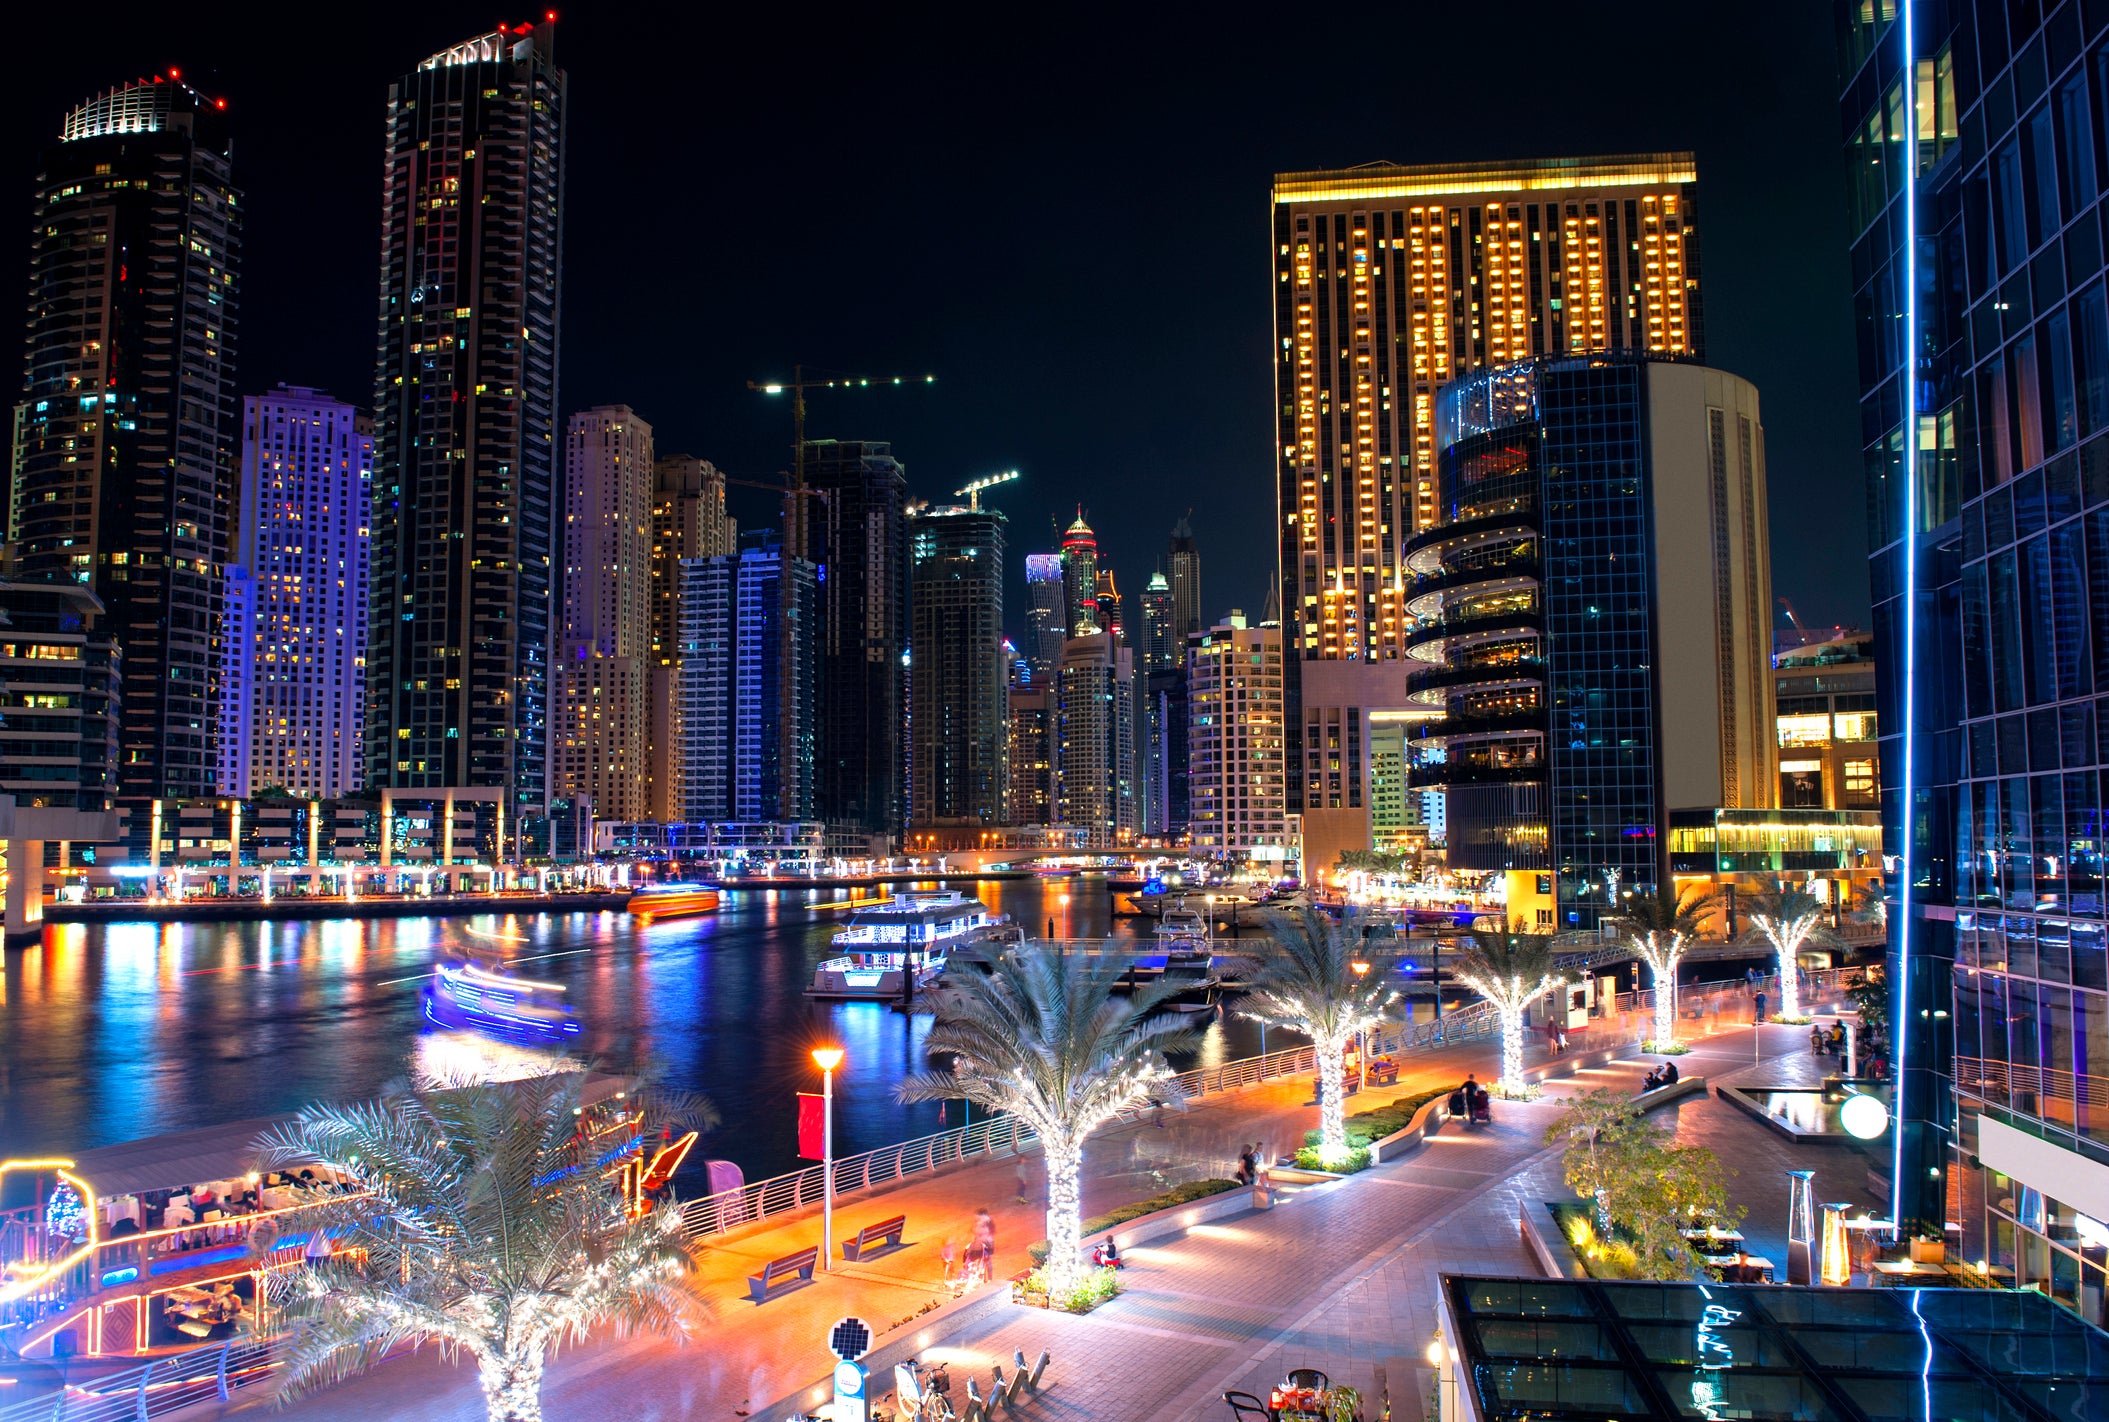 Dubai’s dry December days are rich with festivites